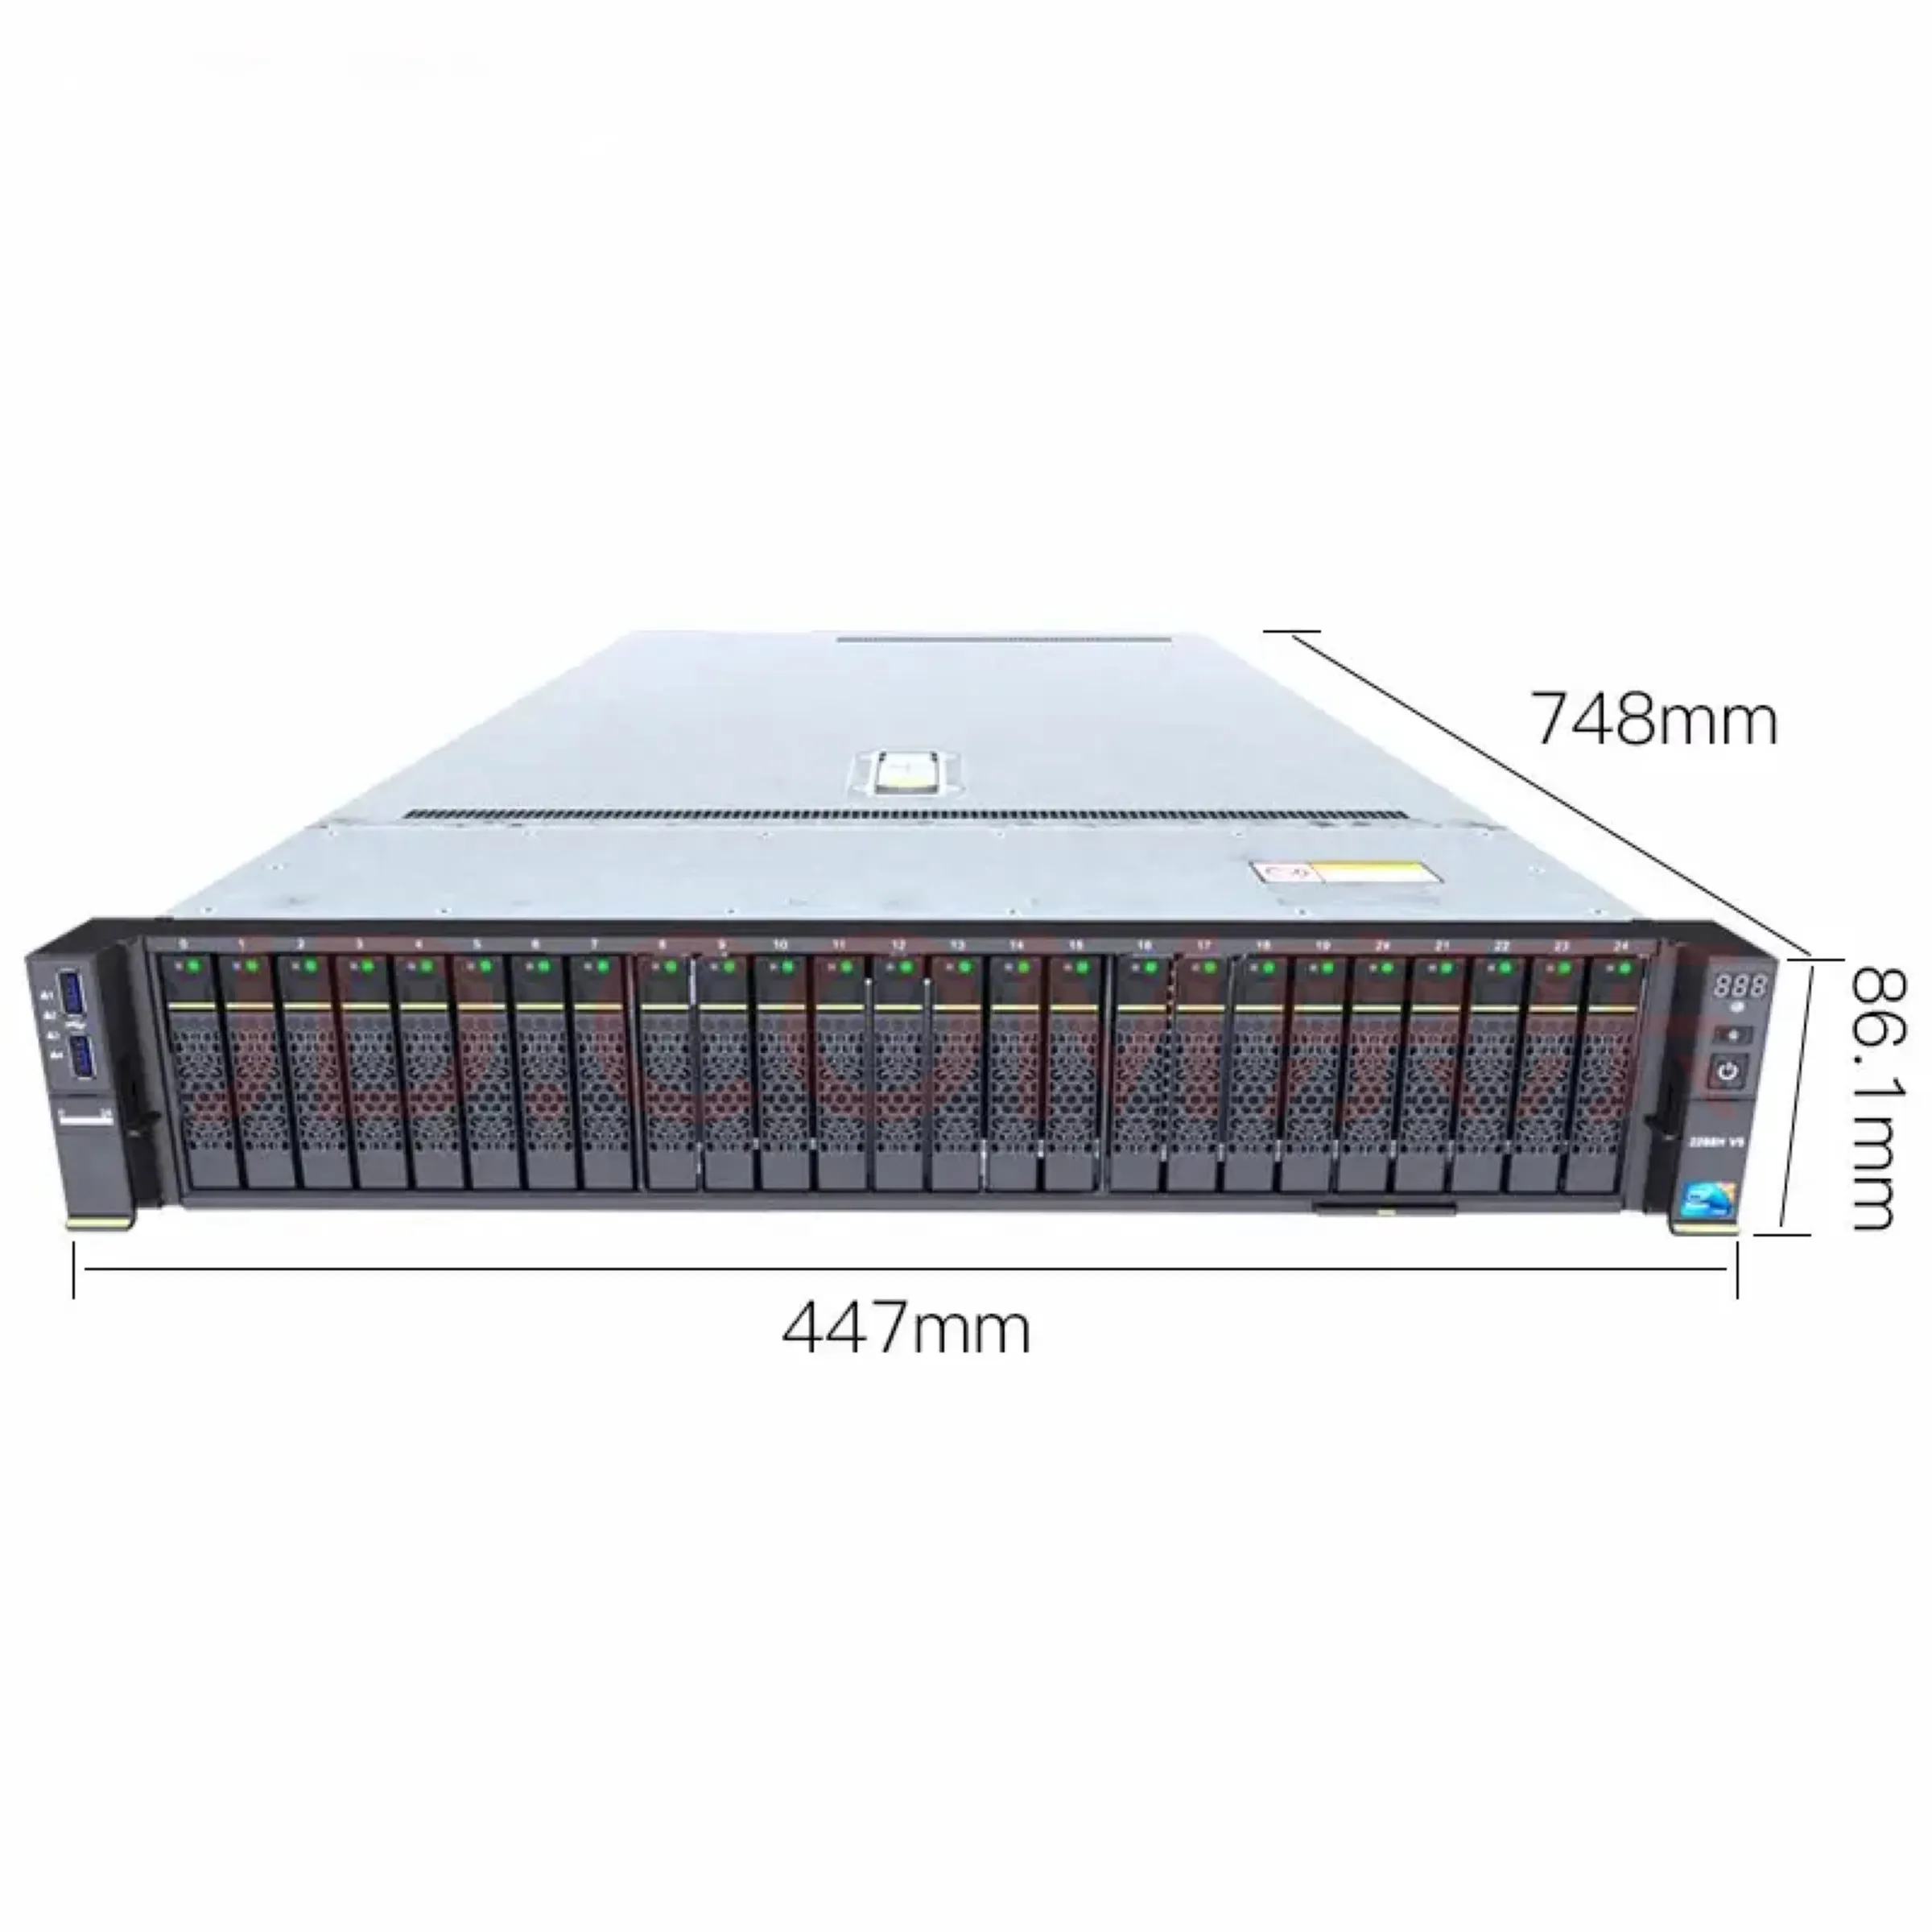 2U rack server with best price